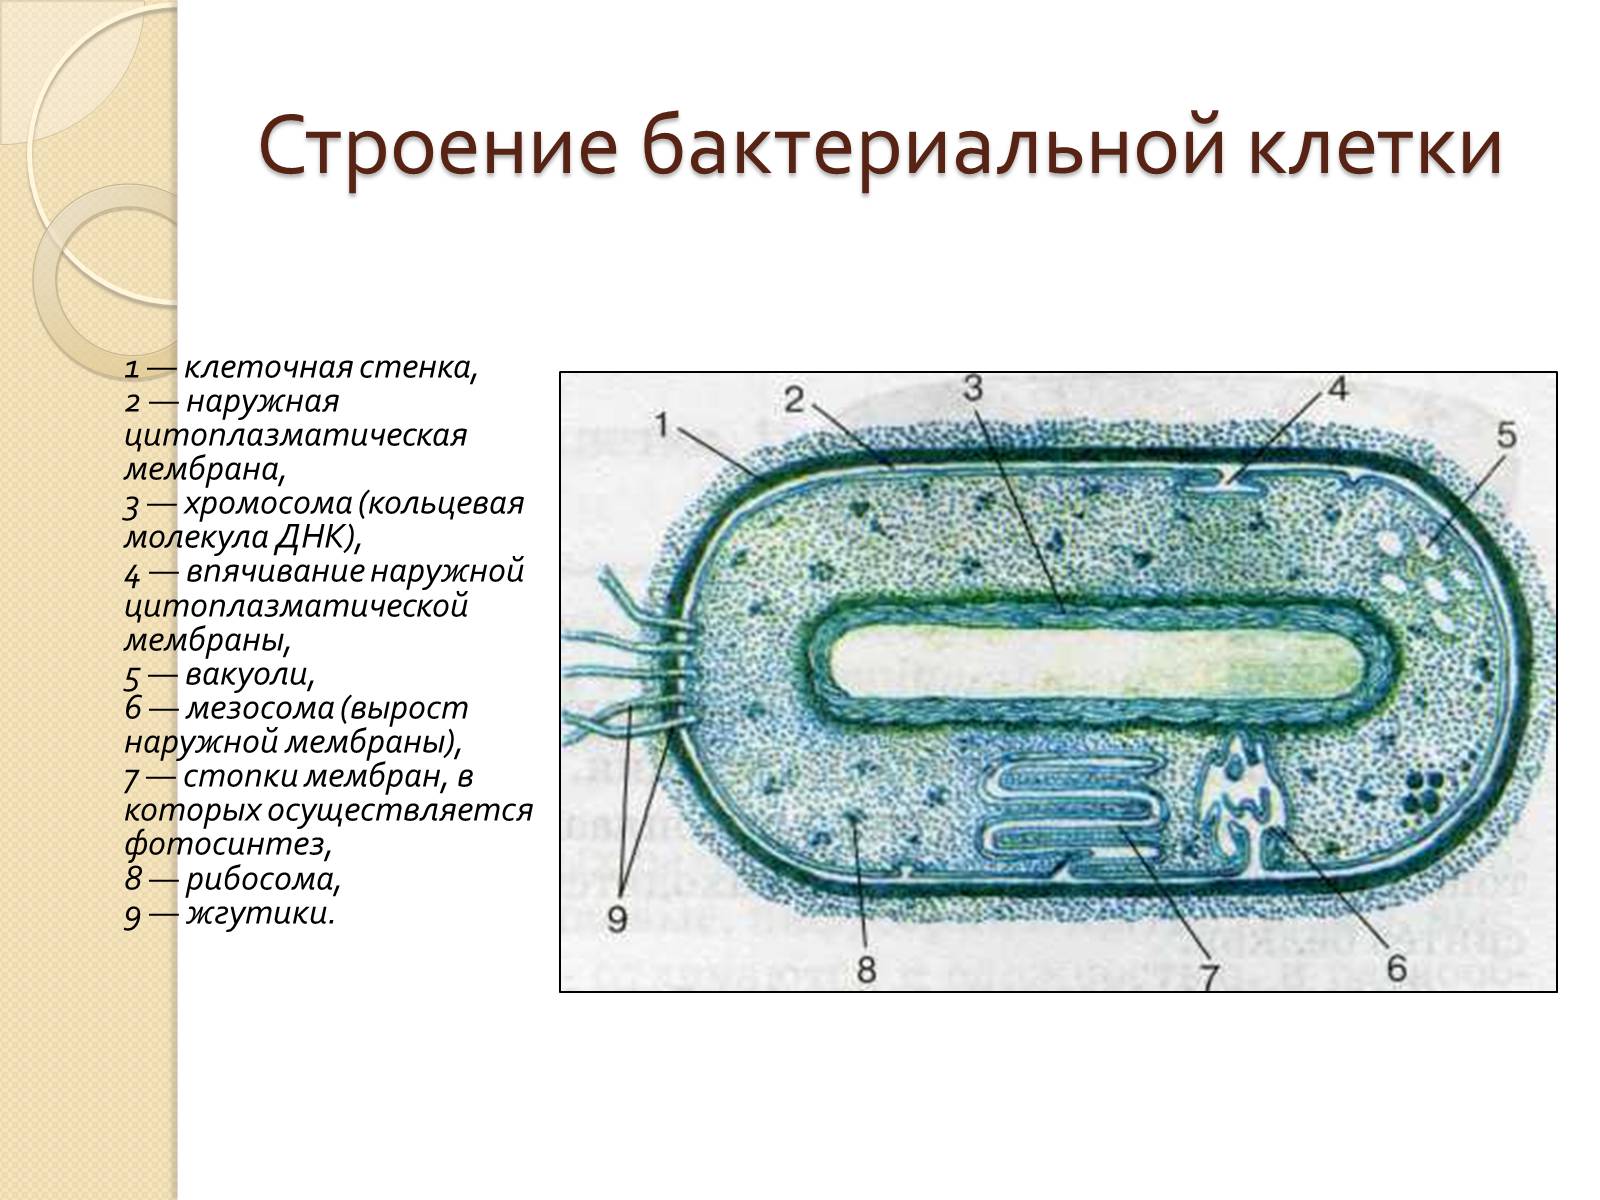 Бактерия прокариот строение. Строение прокариотической клетки бактерии. Строение прокариотической бактериальной клетки. Структура строения прокариотической клетки. Строение бактериальной клетки прокариот.